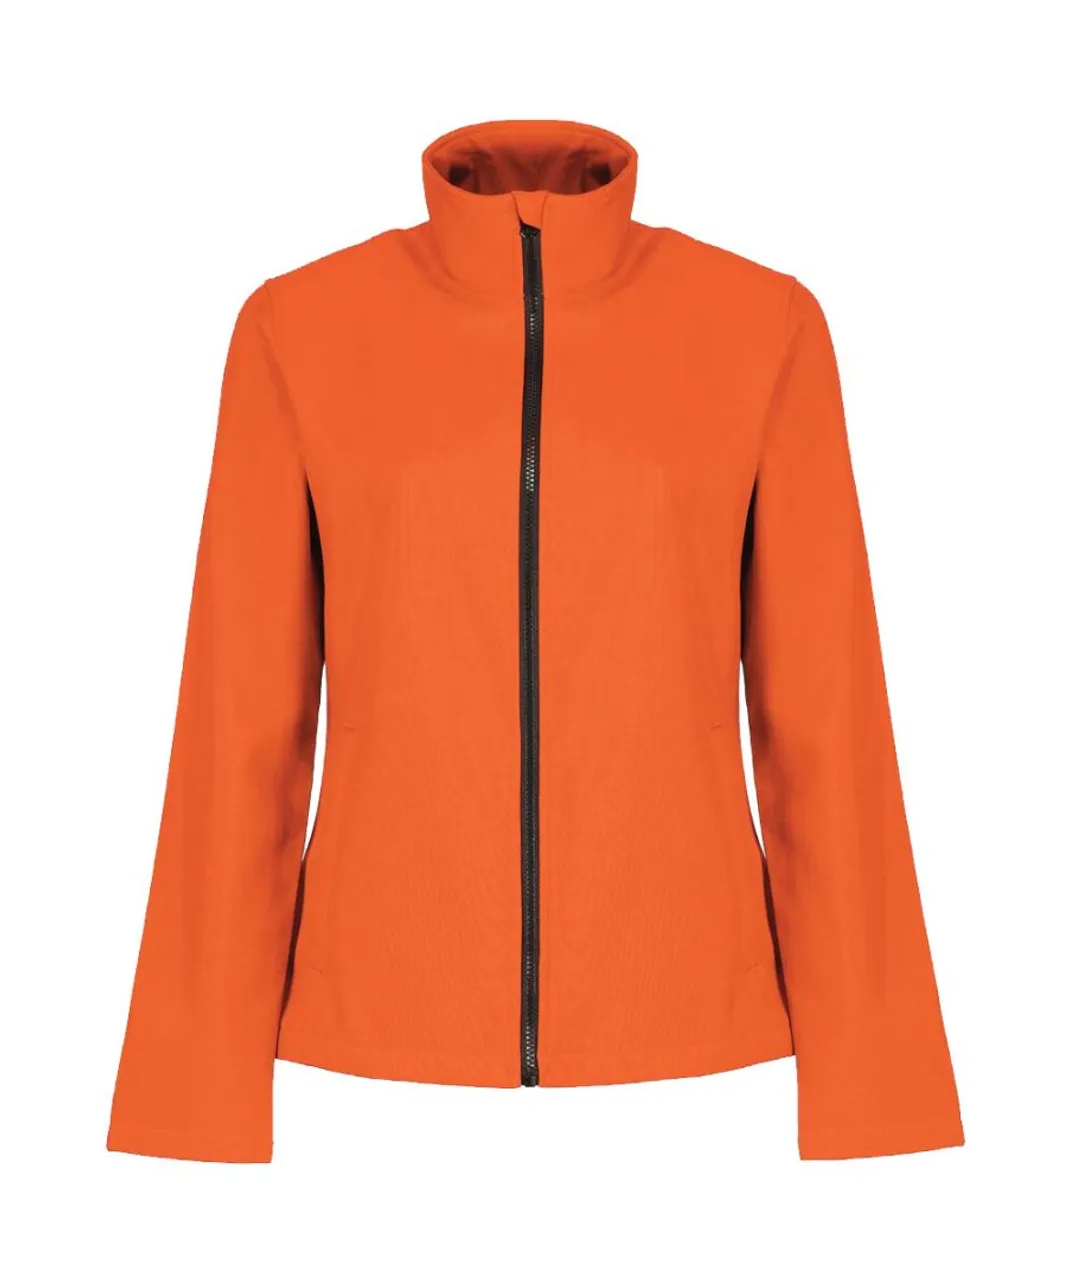 Regatta Standout Womens/Ladies Ablaze Printable Soft Shell Jacket (Magma Orange/Black) - Multicolour